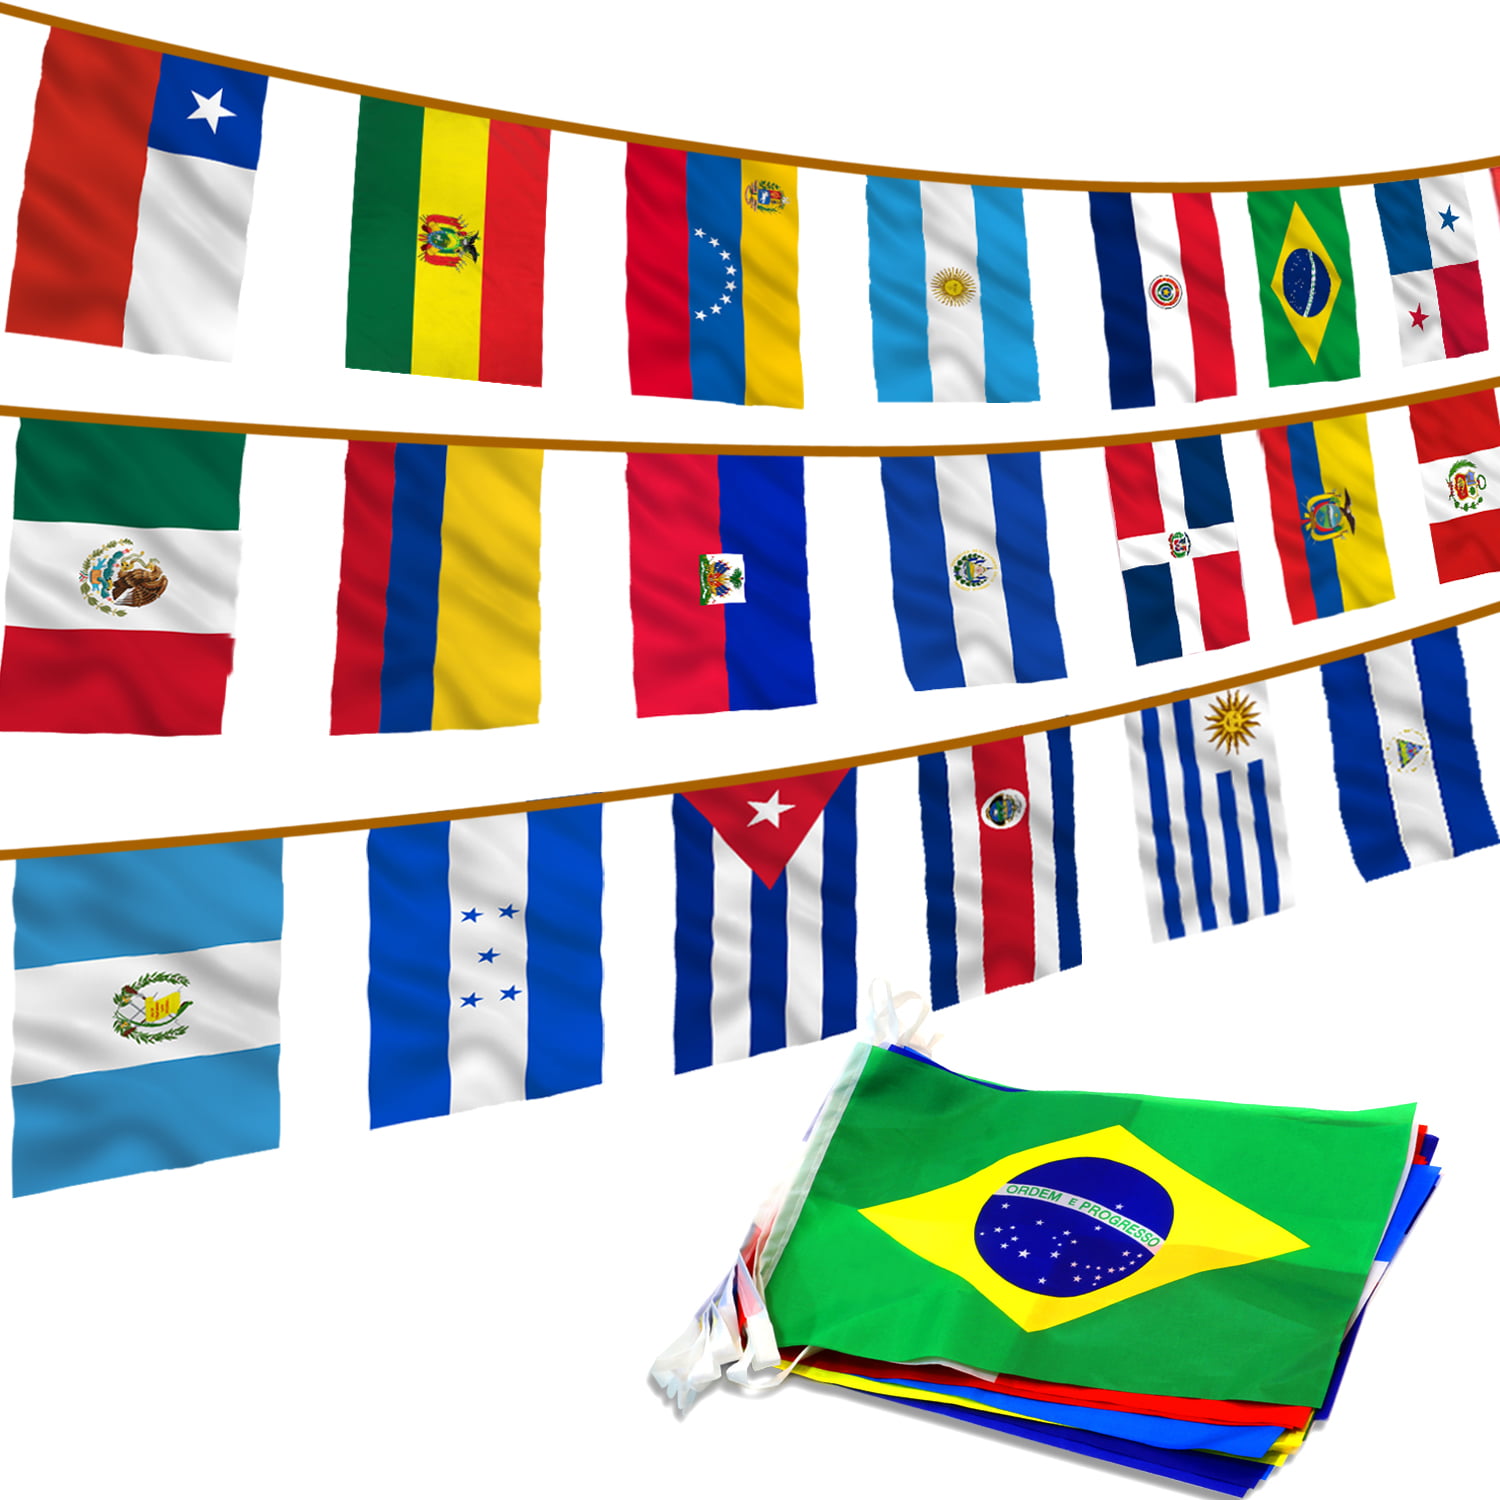 Venezuela 8 Stars Flag 5 x 3 FT South America 100% Polyester With Eyelets